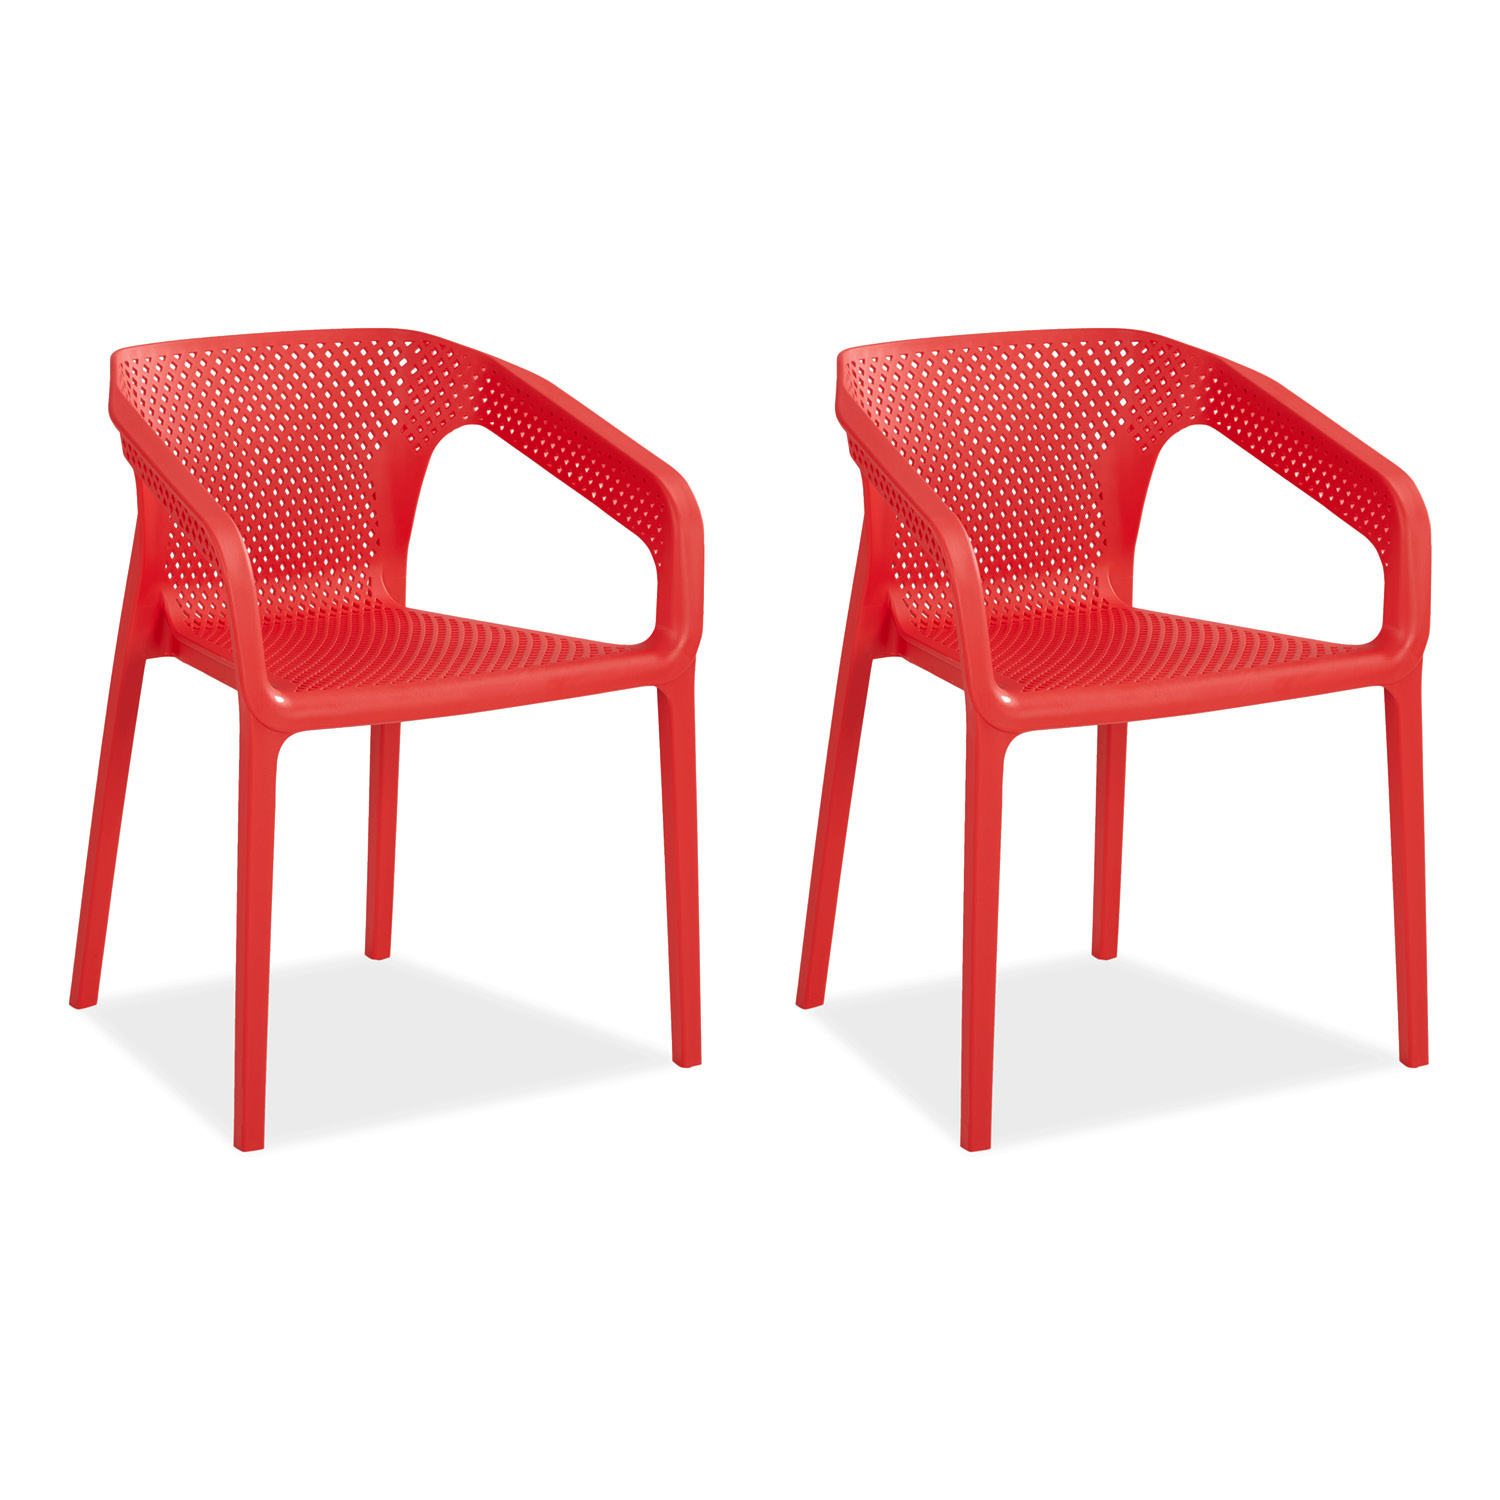 Gartenstuhl mit Armlehnen 2er Set Gartensessel Rot Stühle Kunststoff Stapelstühle Balkonstuhl Outdoor-Stuhl